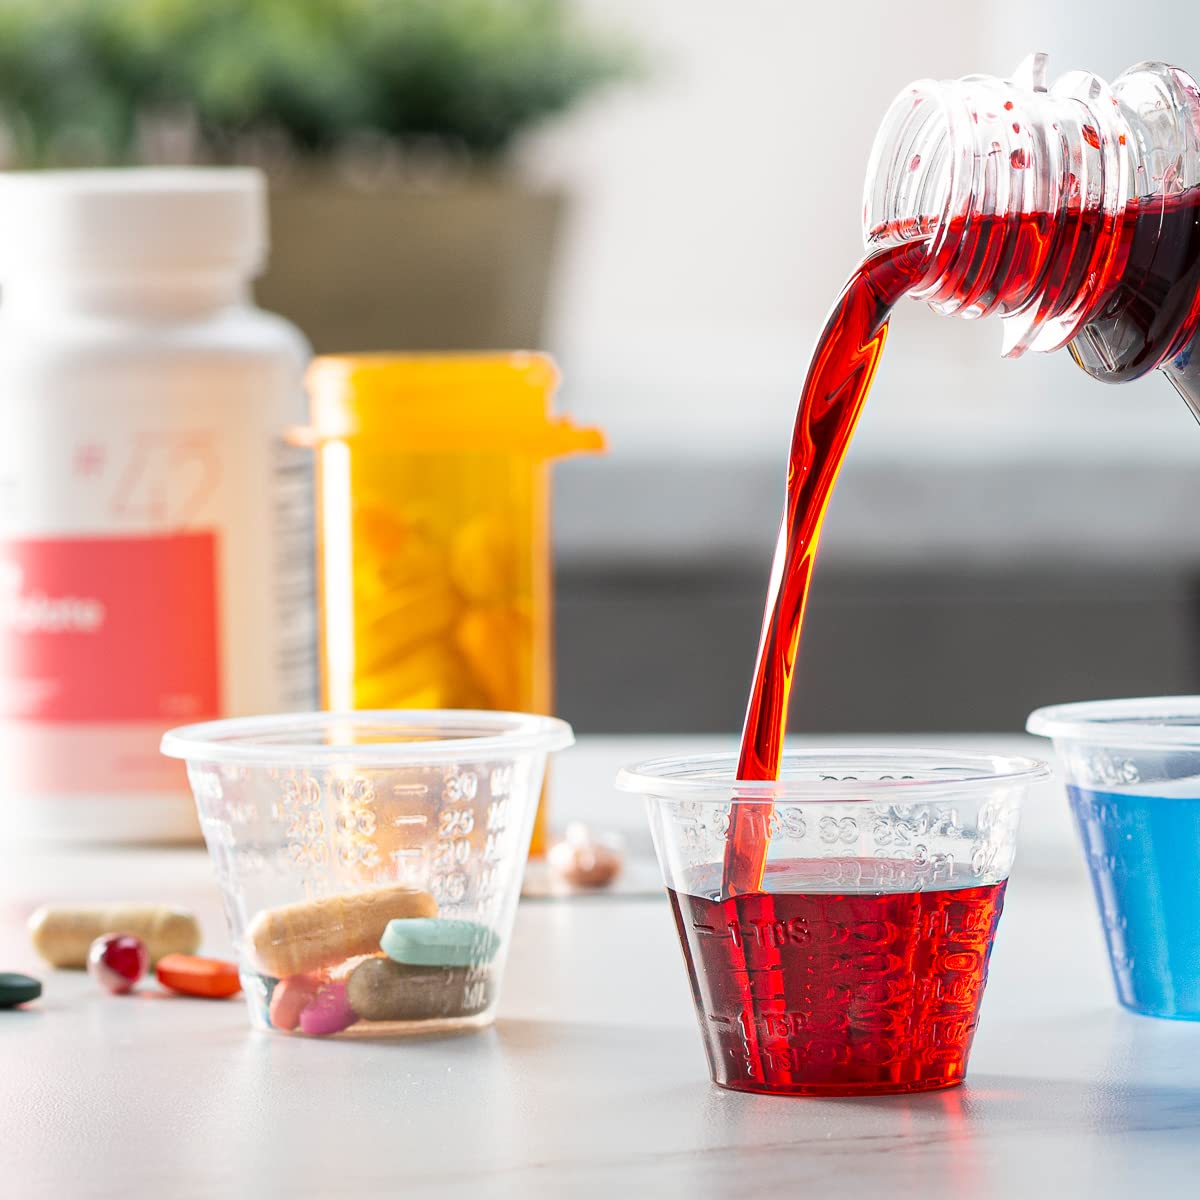 [100 Count - 1 oz.] Plastic Disposable Medicine Measuring Cup for Liquid Medicine, Epoxy, & Pills